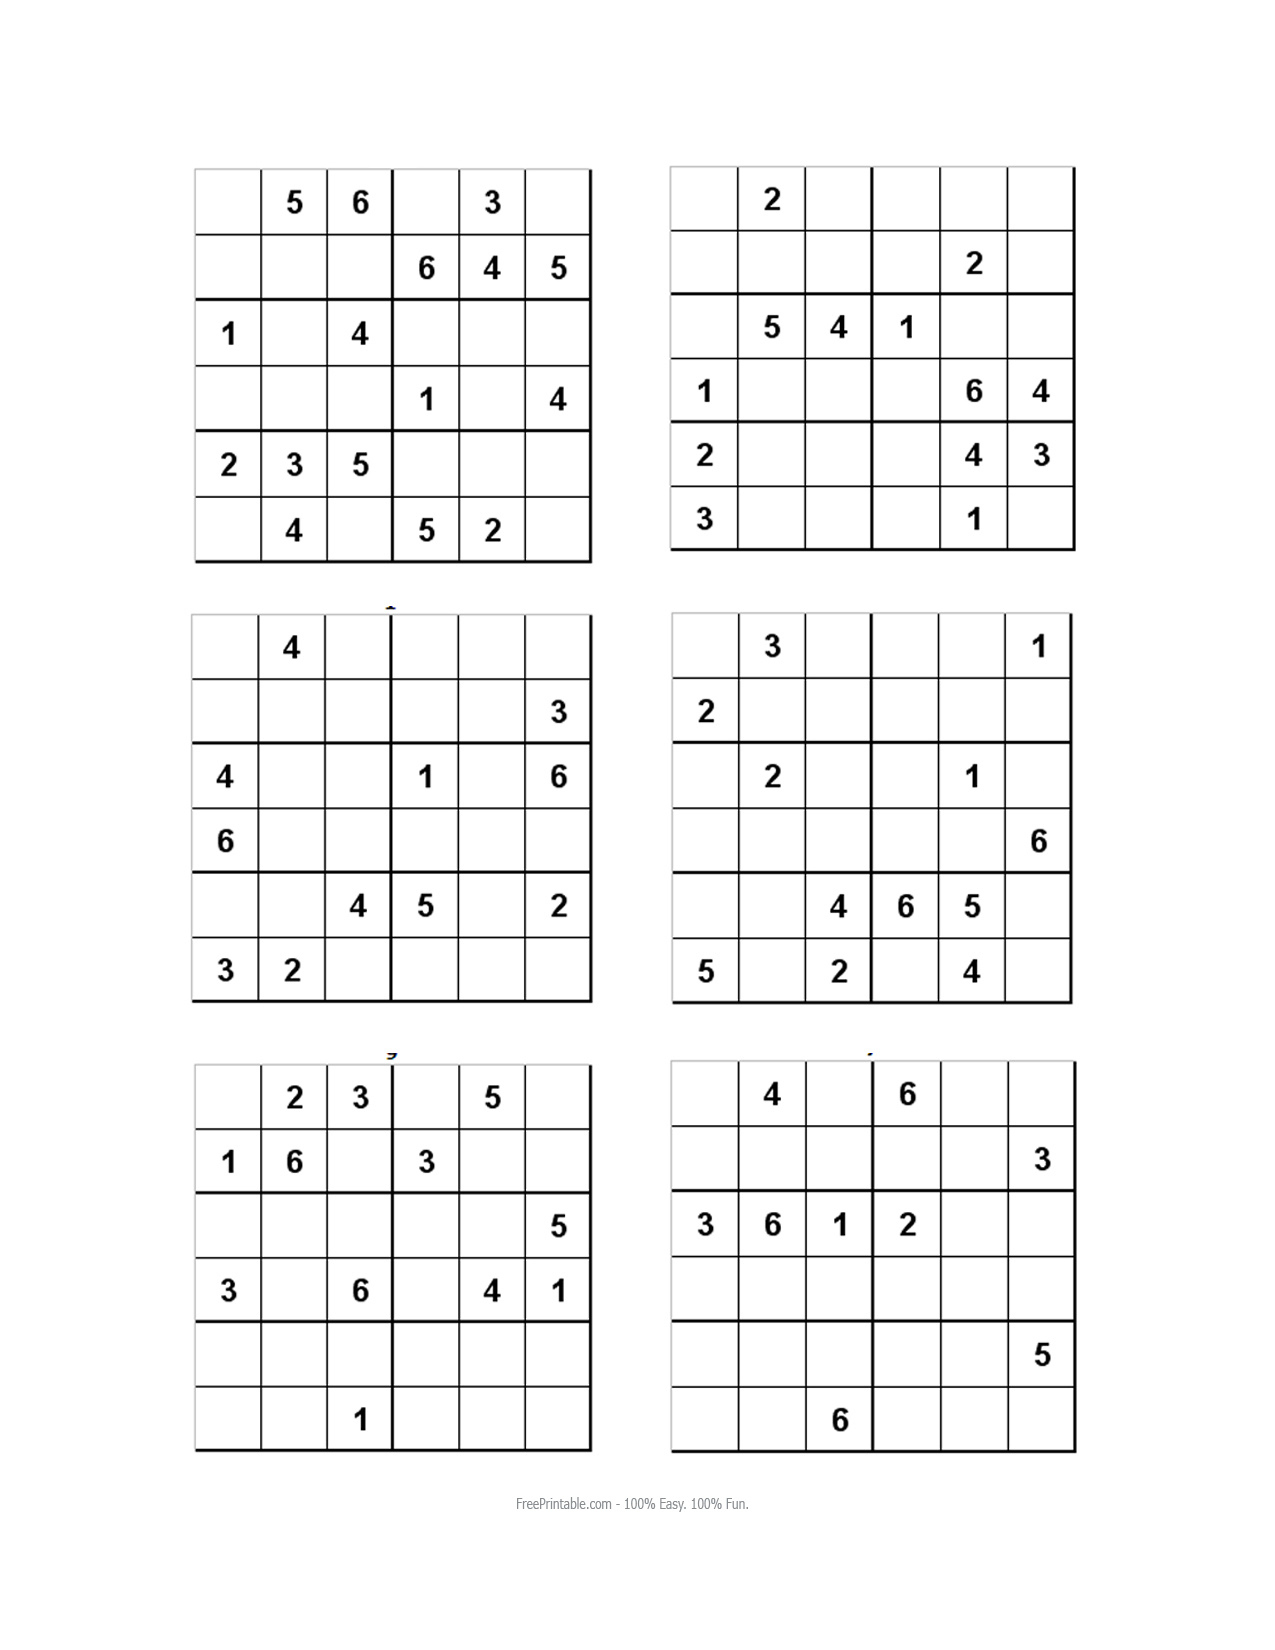 sudoku-puzzles-printable-6x6-printable-crossword-puzzles-sudoku